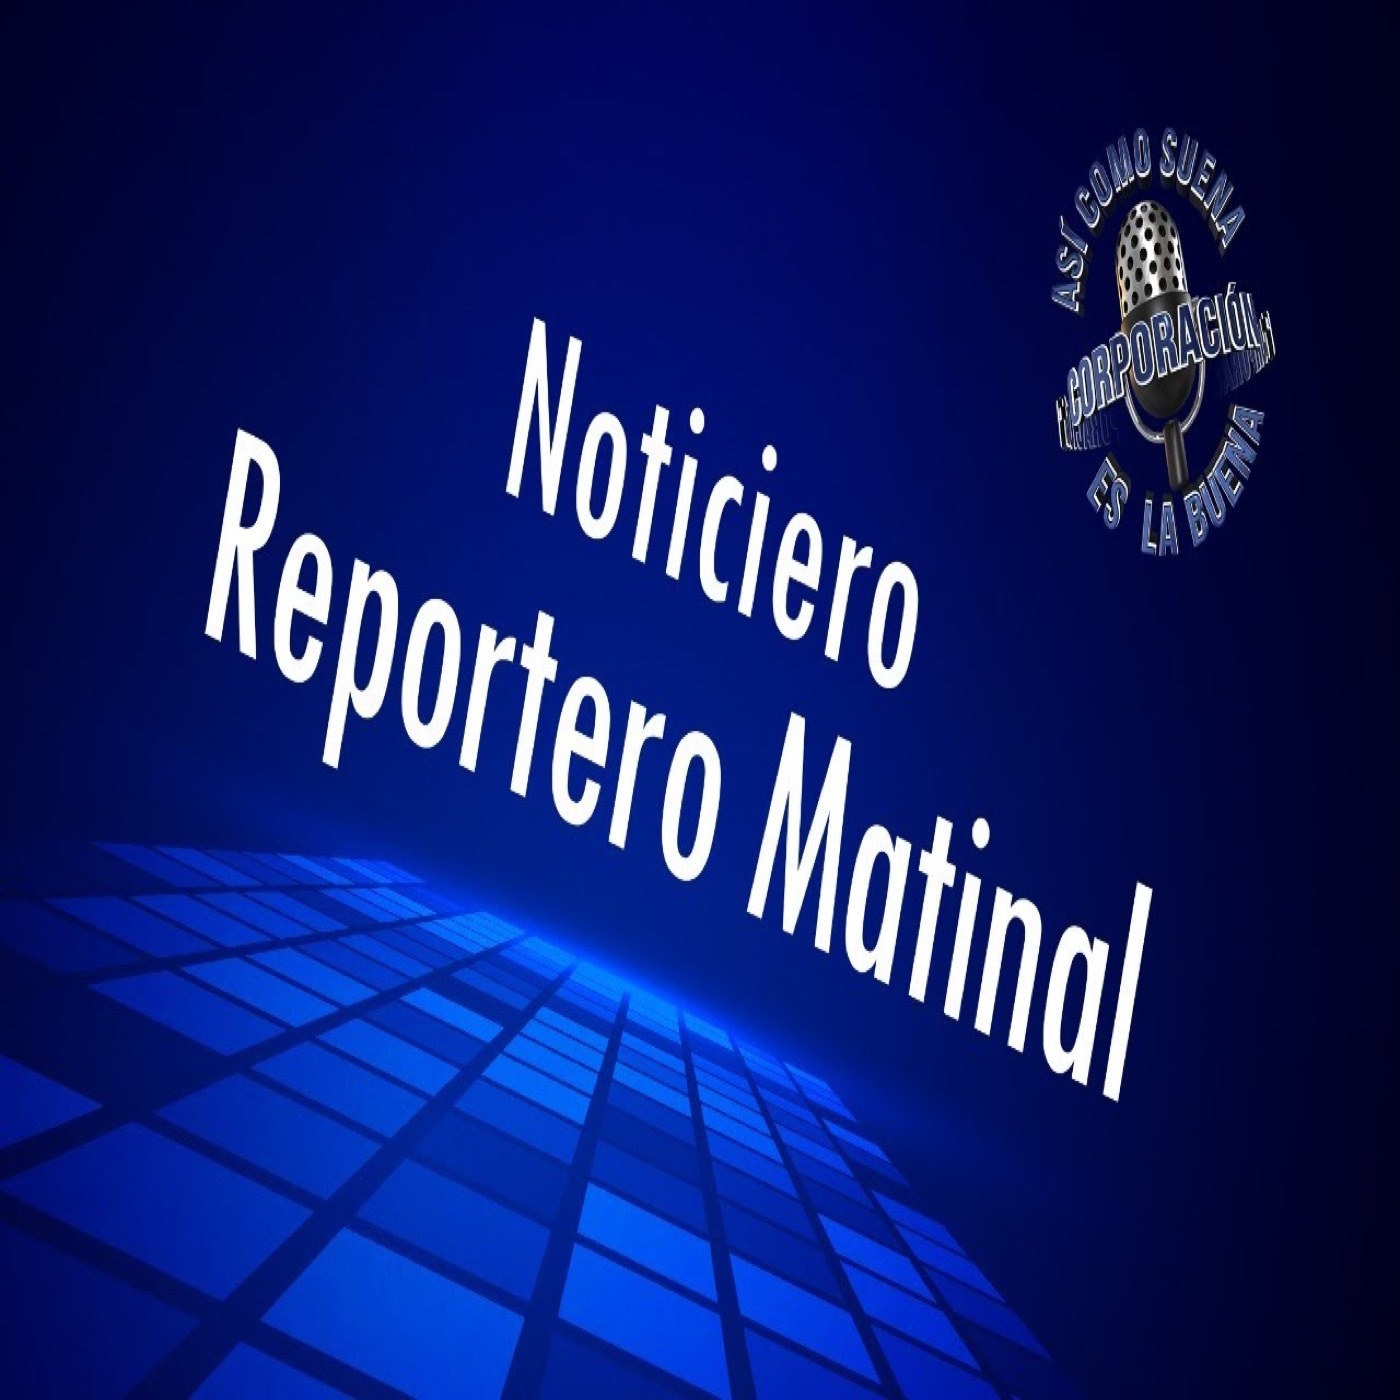 Noticiero Reportero Matinal - Wednesday, November 23, 2022